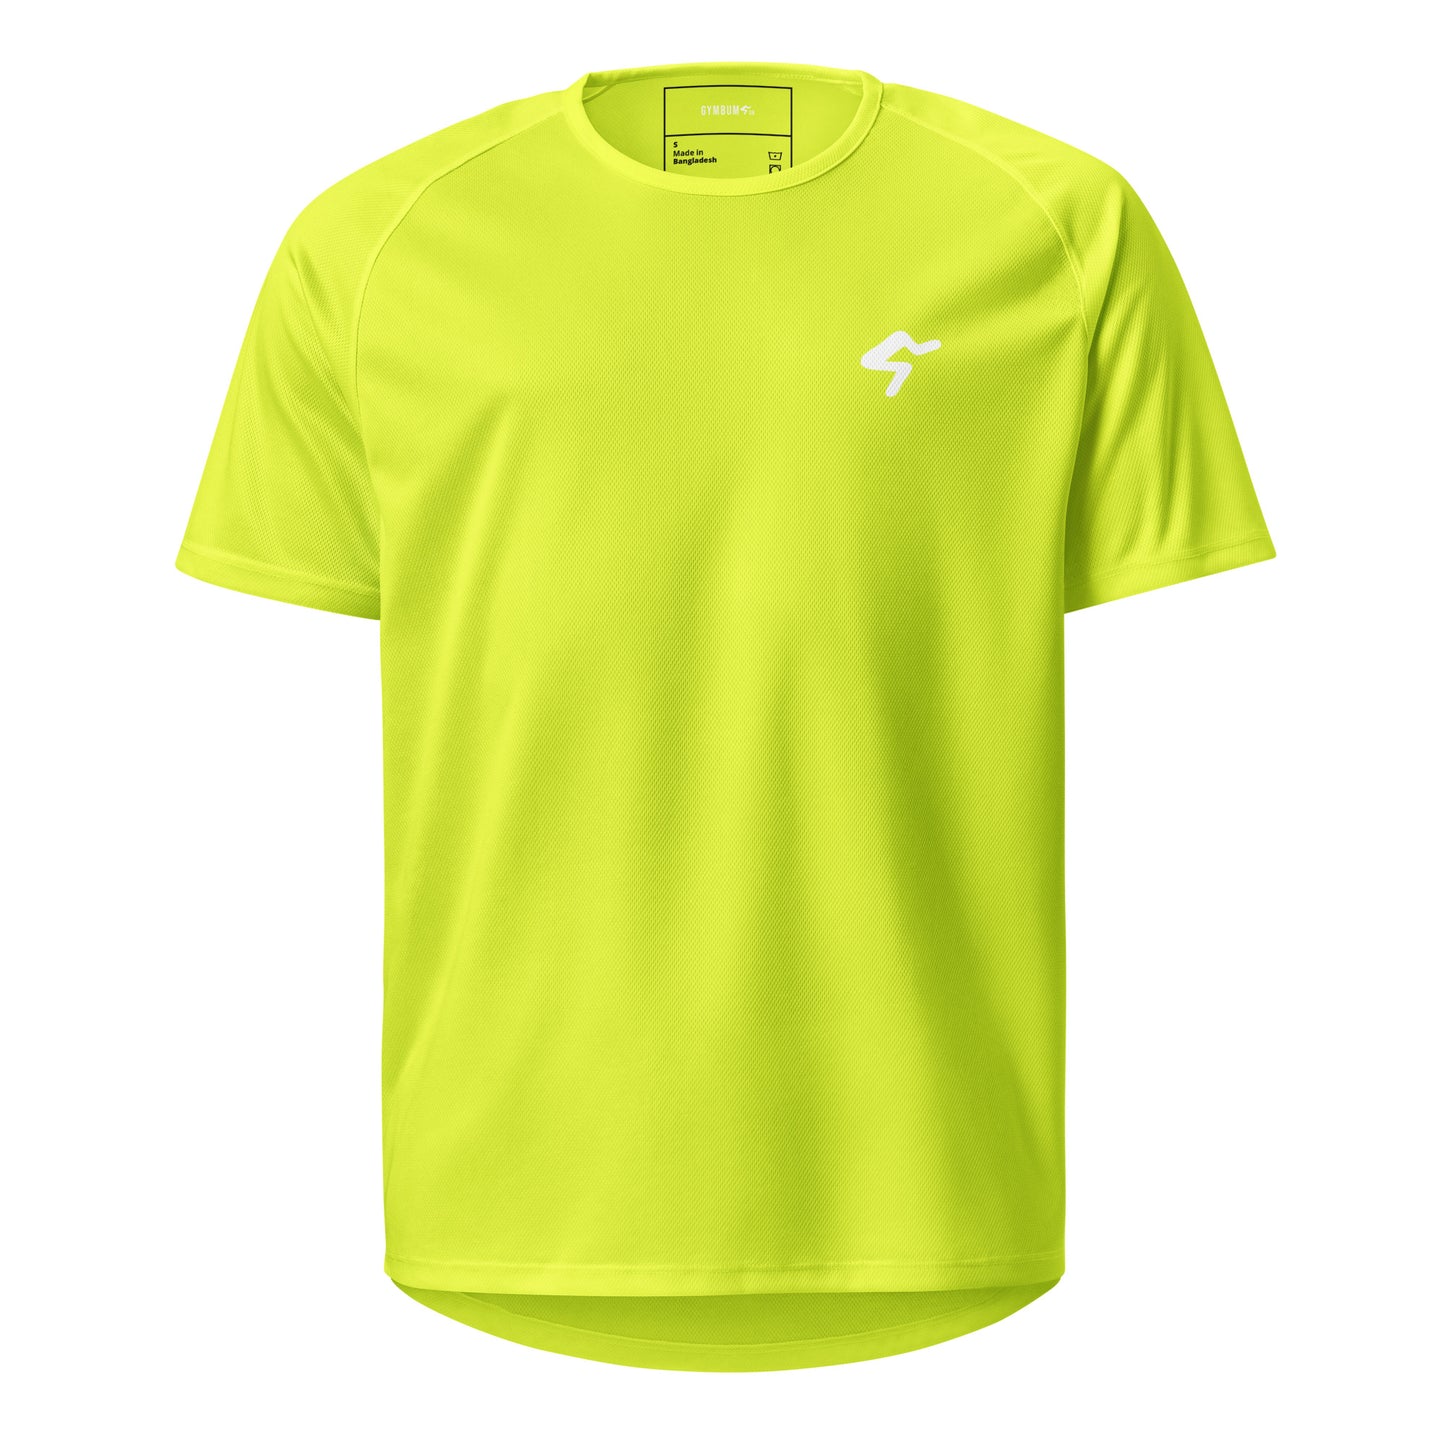 The GymbumUK Squat QuickDry Unisex Performance Sport T-Shirt